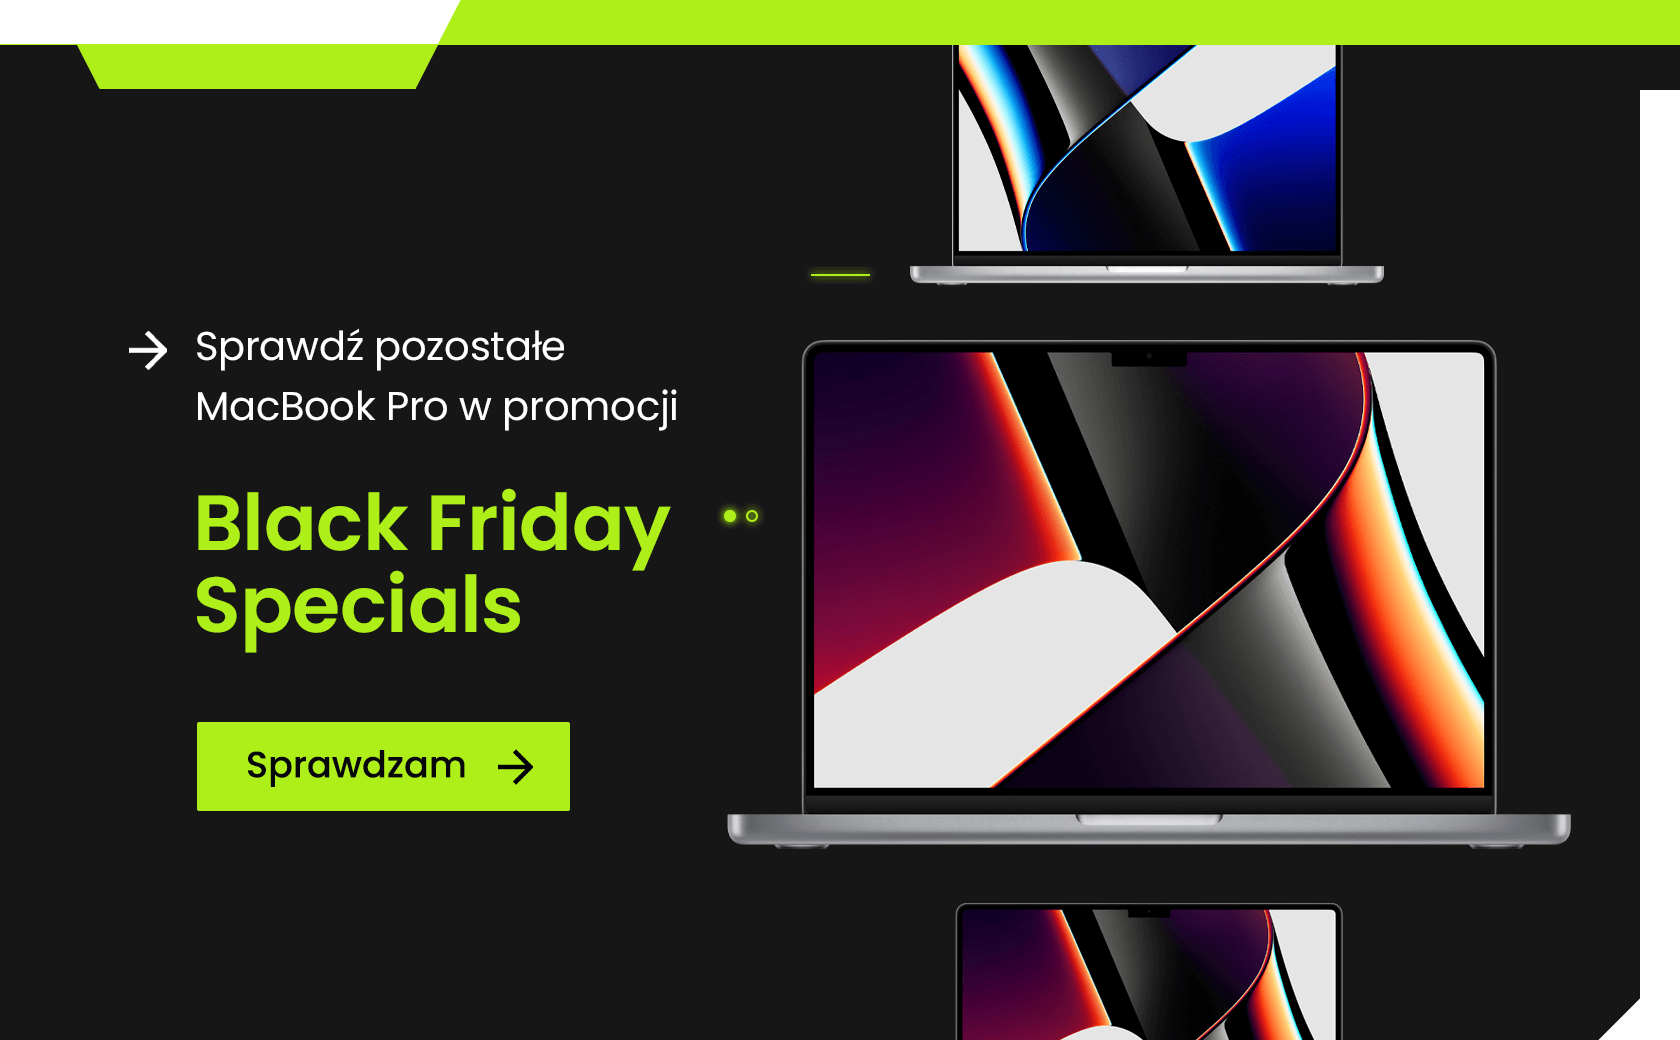 Black Friday Specials - MacBook Pro